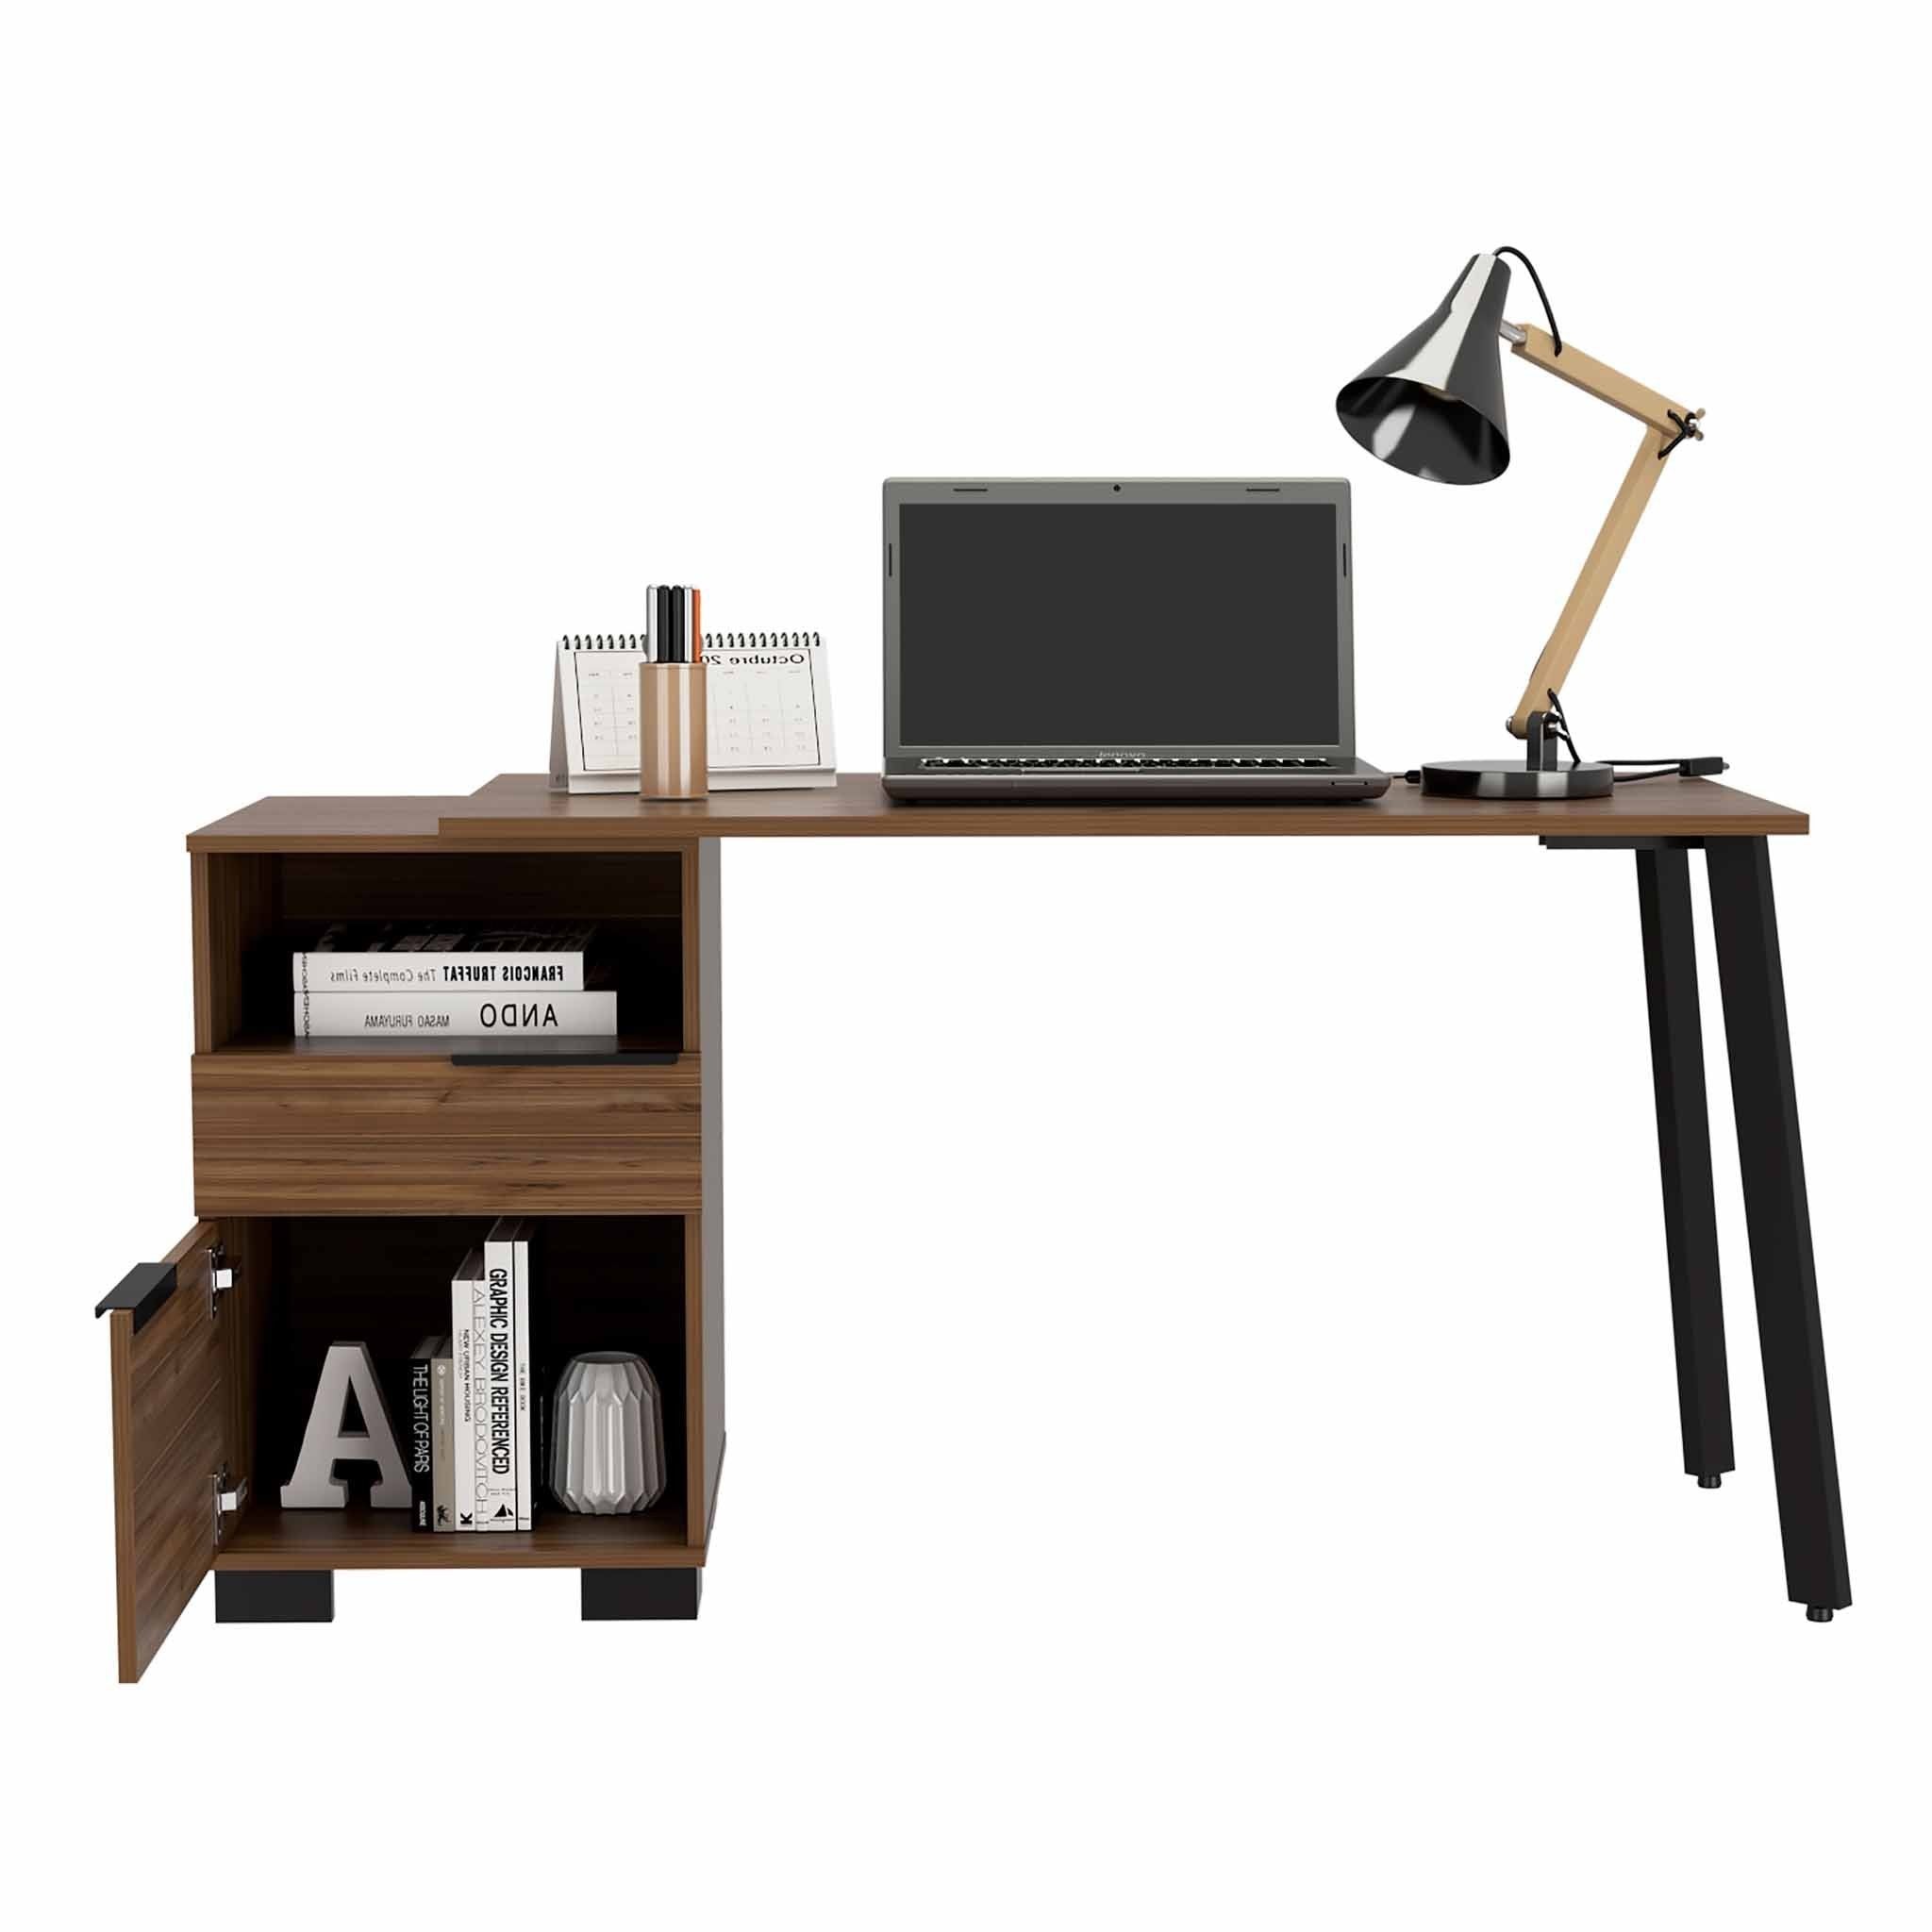 56" Brown and Black Computer Desk